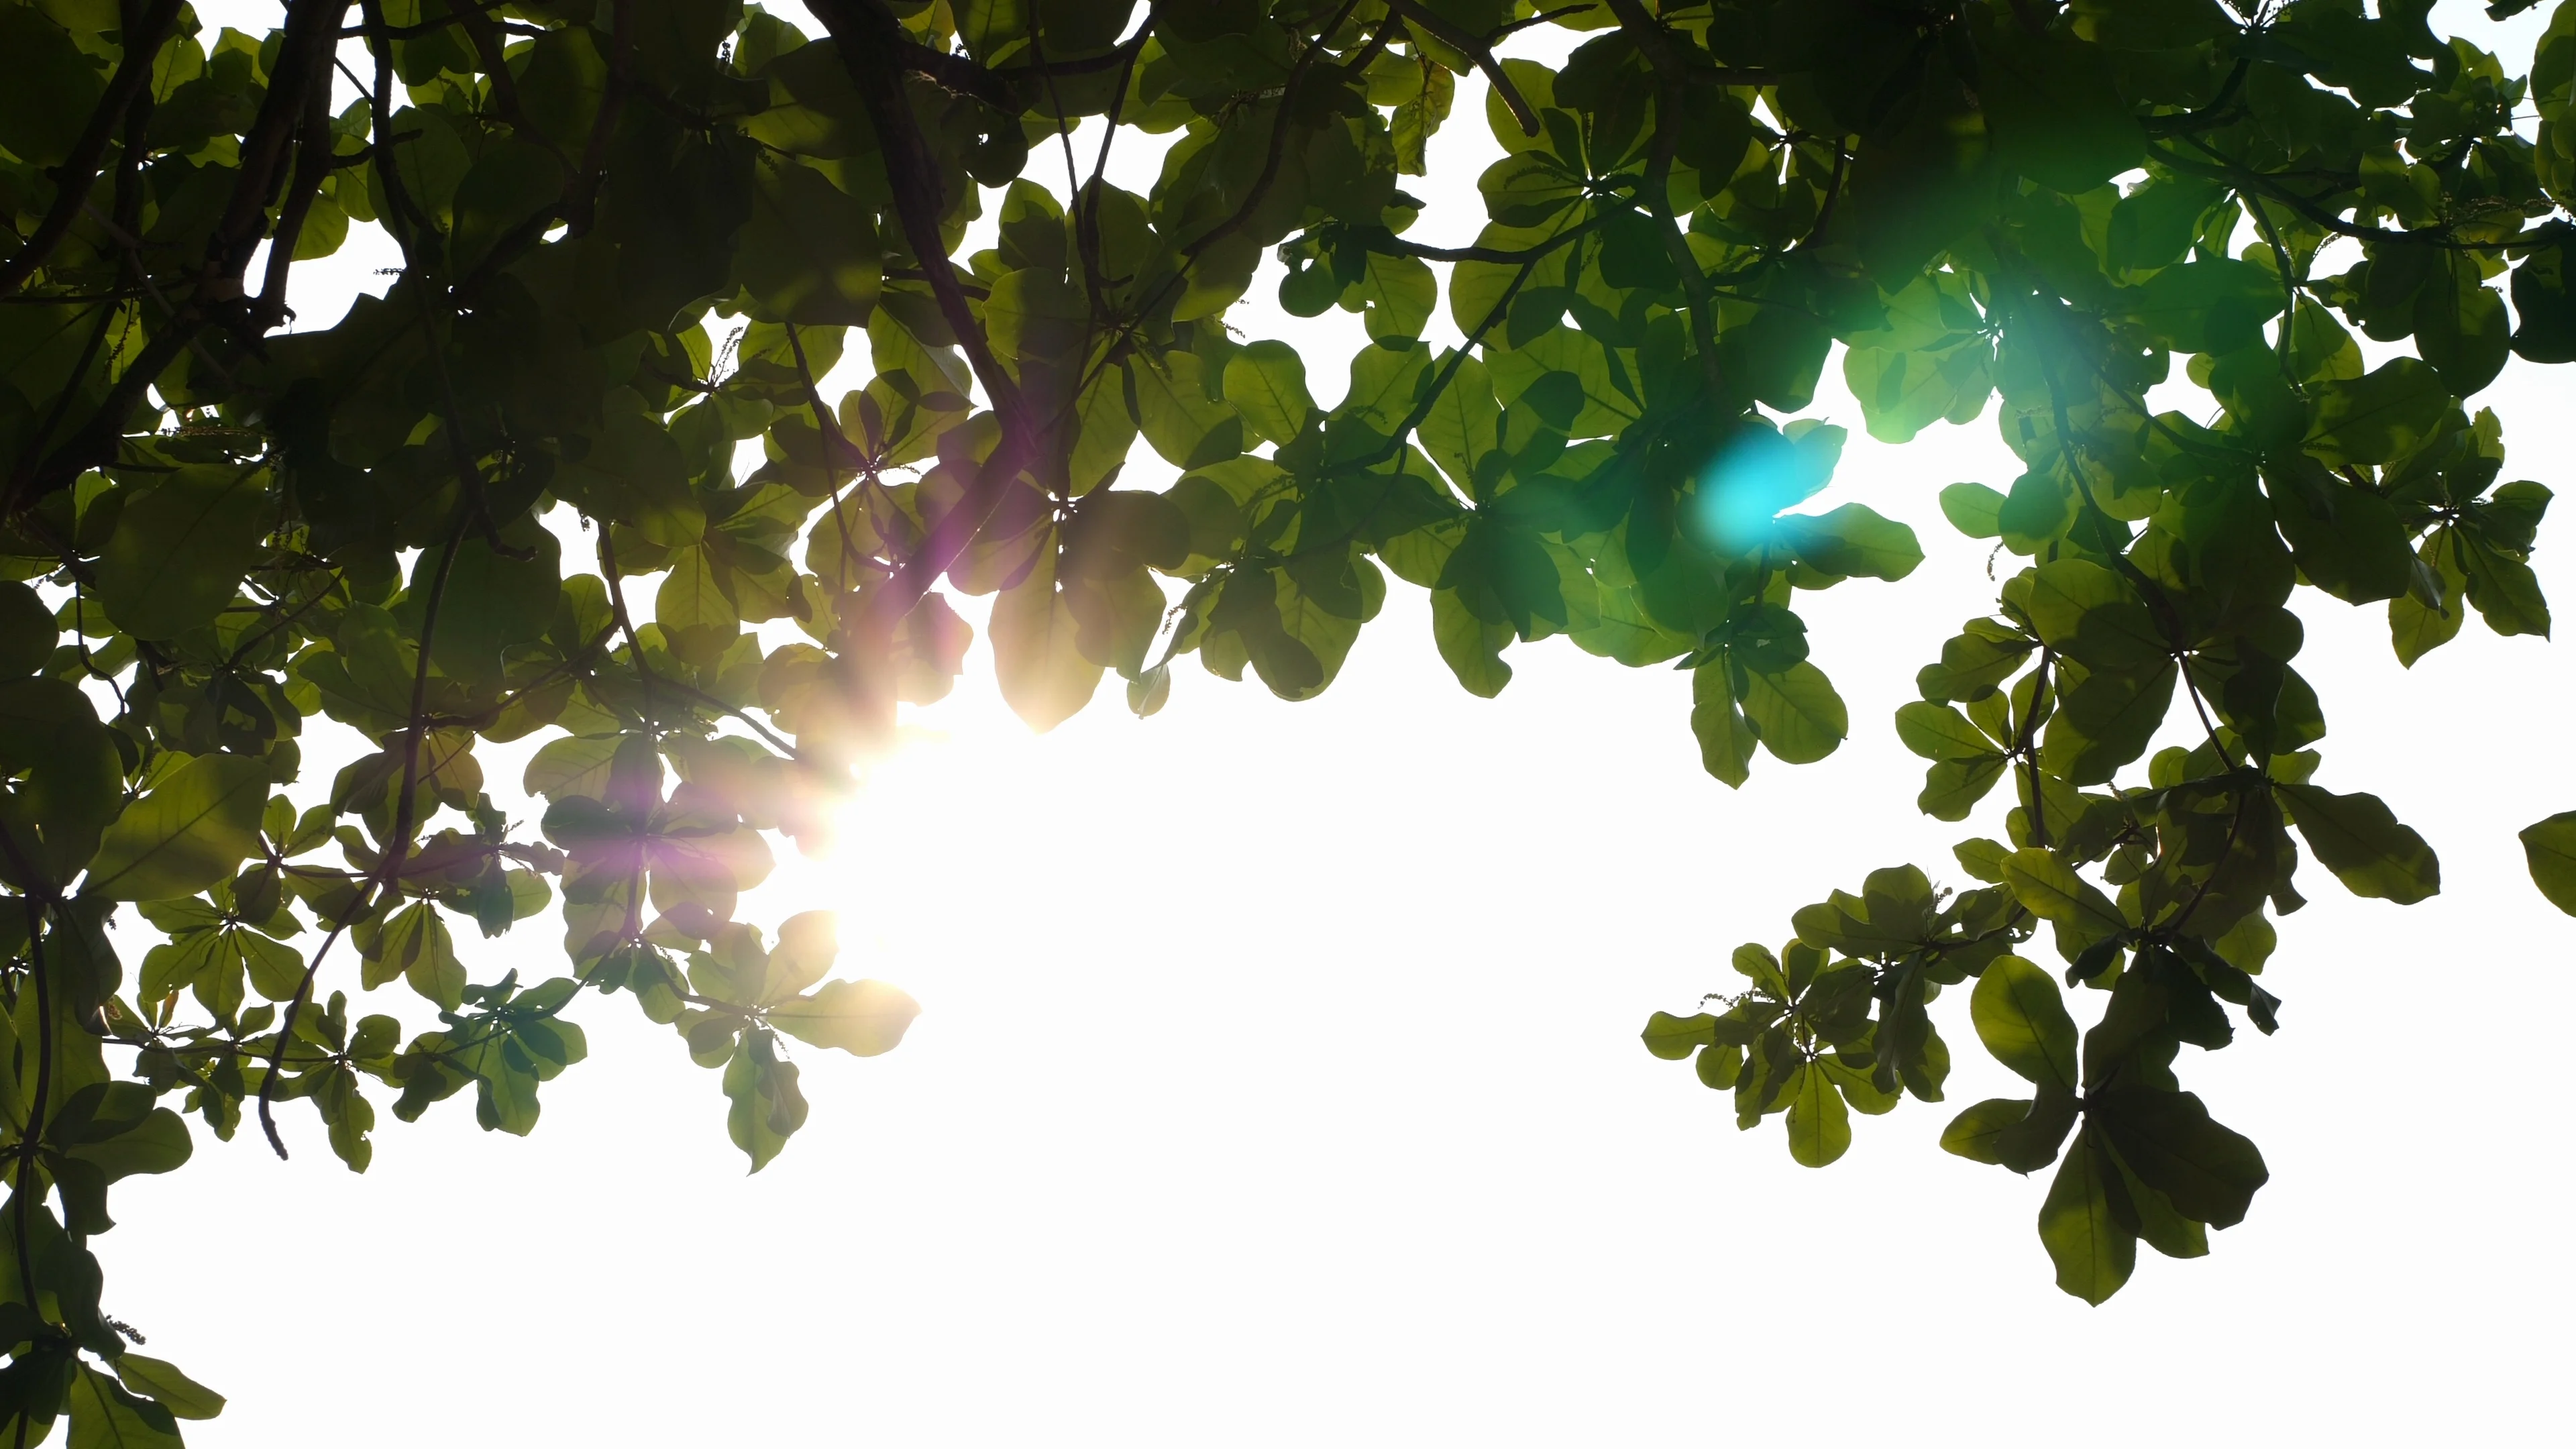 farve Lave klassekammerat sun light through leaves on tree, sunny ... | Stock Video | Pond5